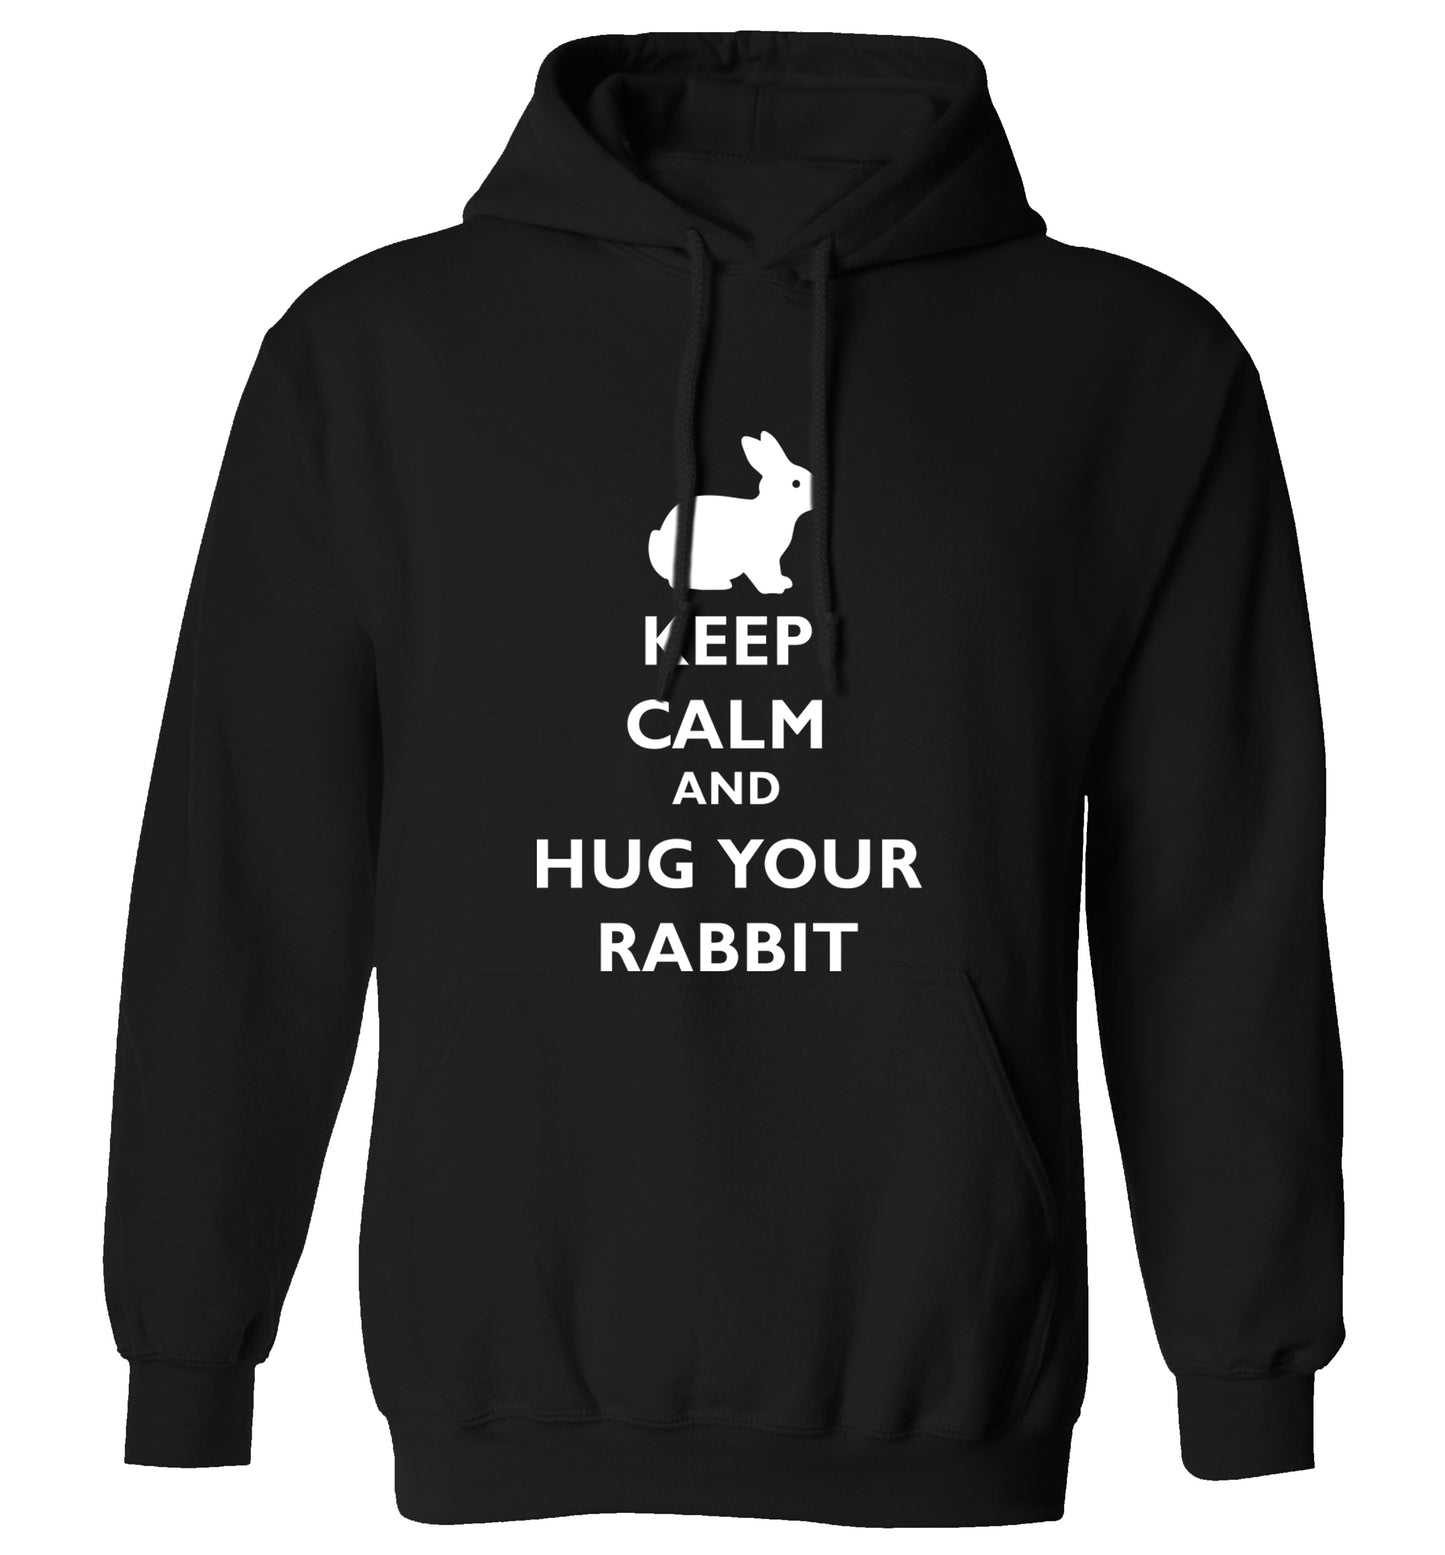 Keep calm and hug your rabbit adults unisex black hoodie 2XL